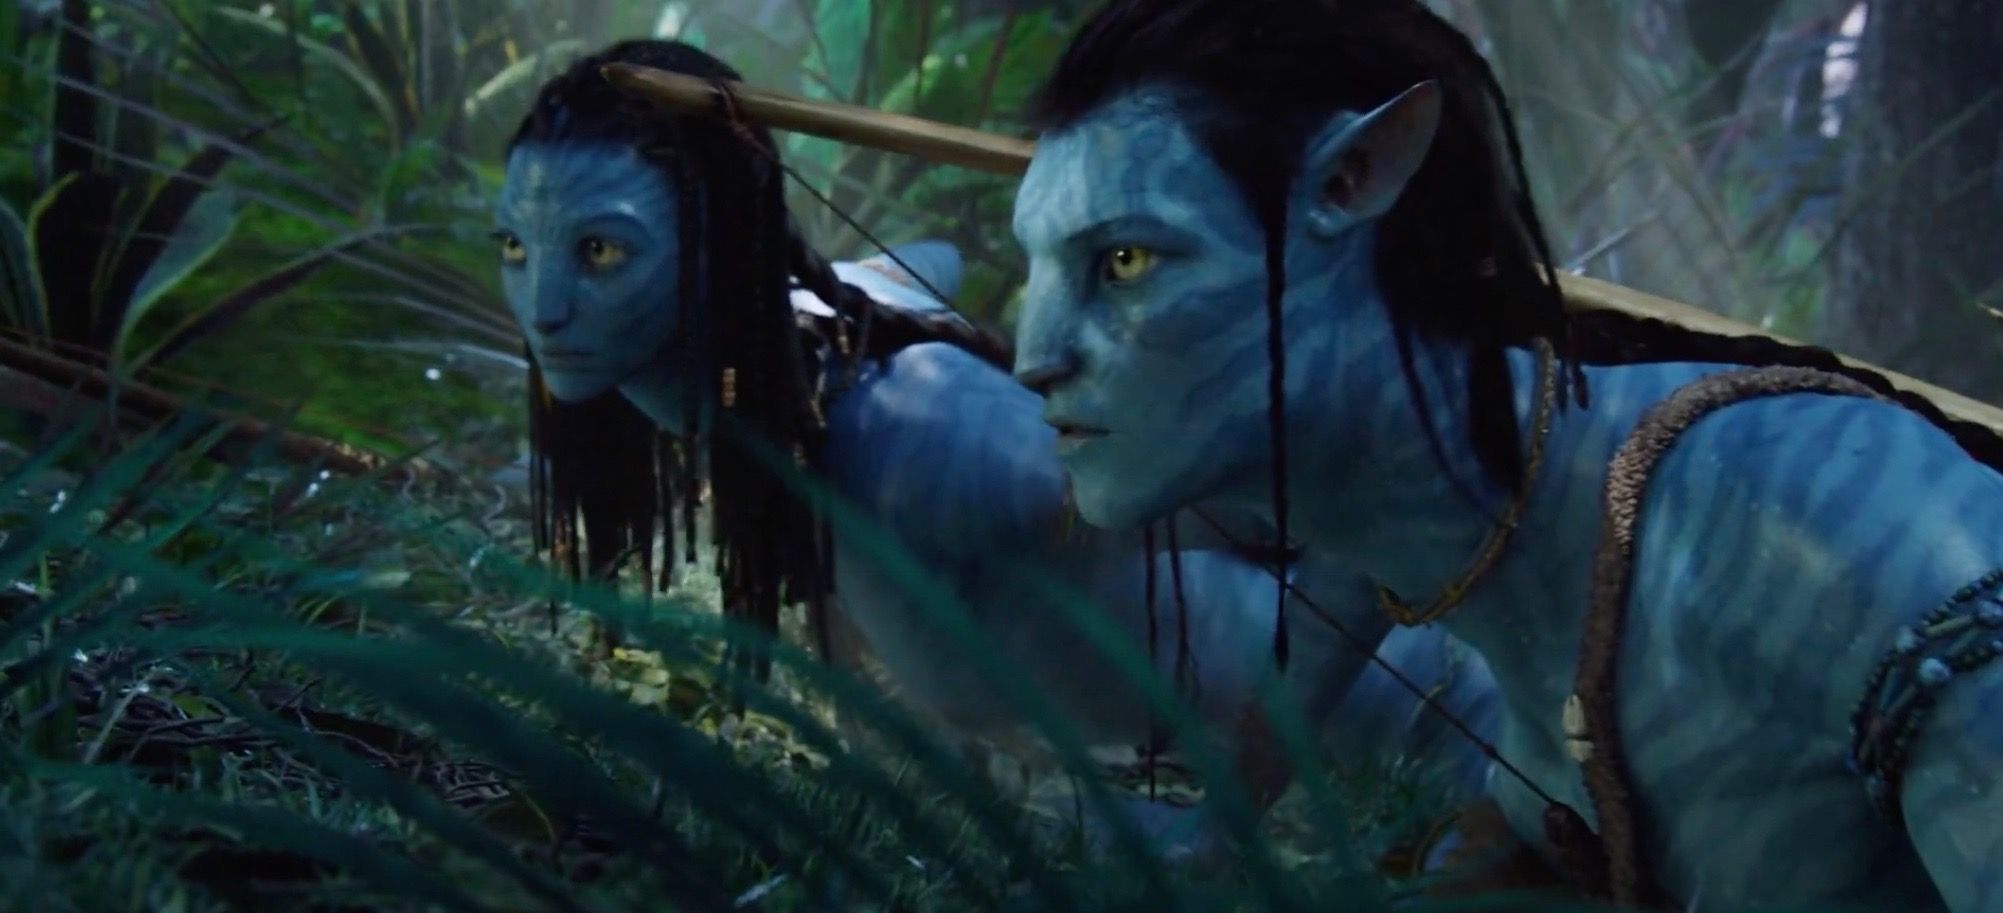 Sam Worthington as his Na'vi avatar next to Neytiri in Avatar.